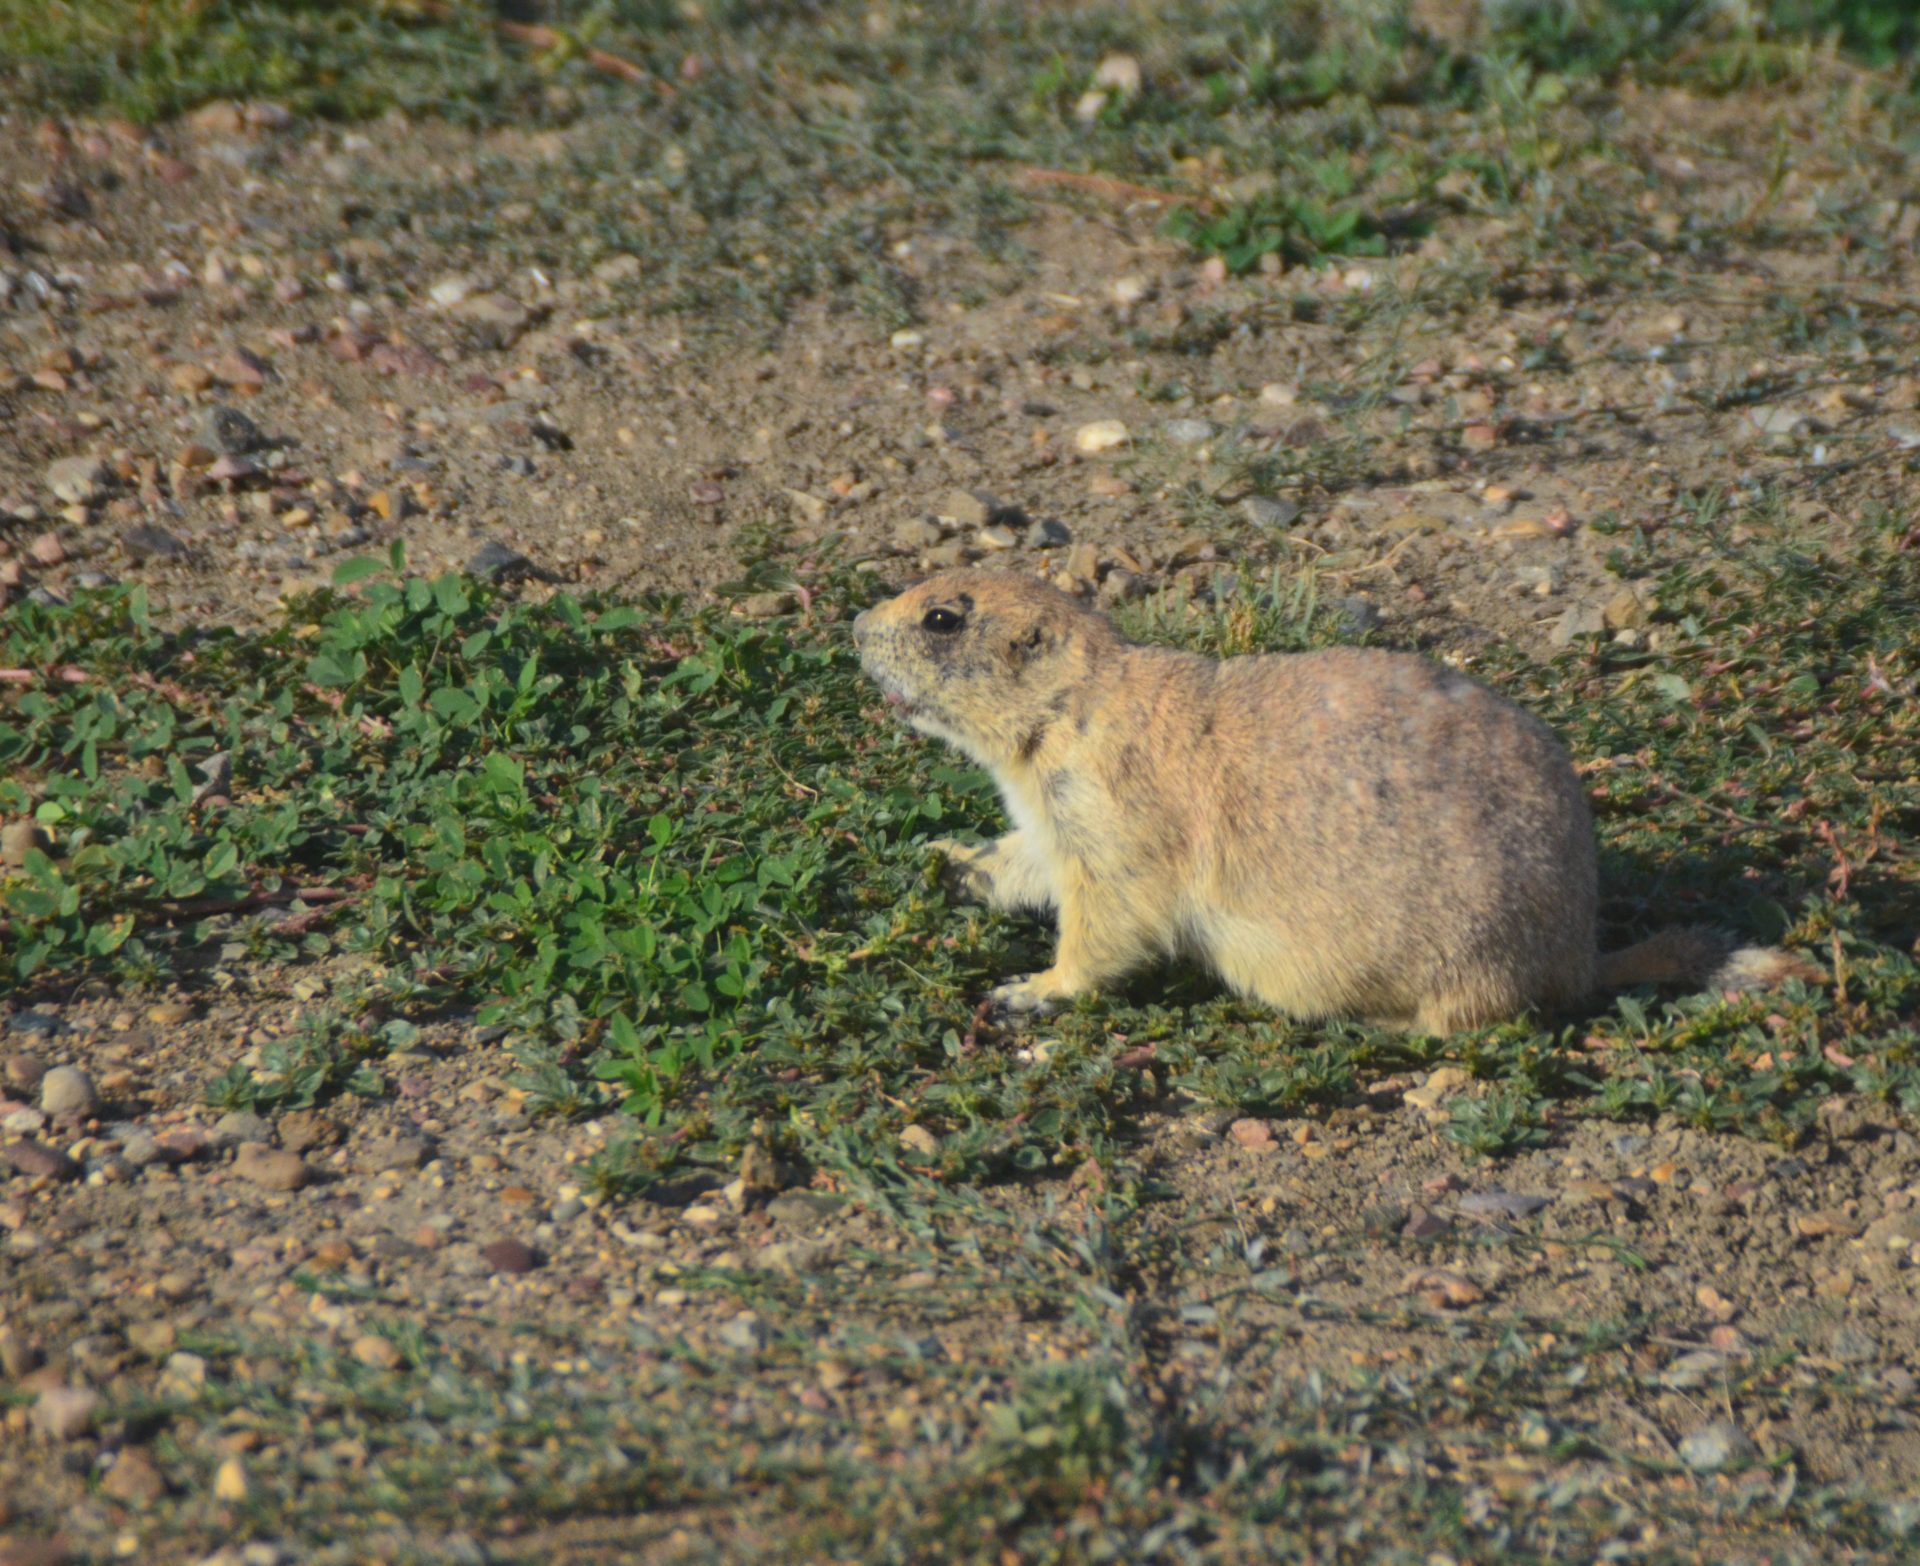 Grasslands National Park prairie dog